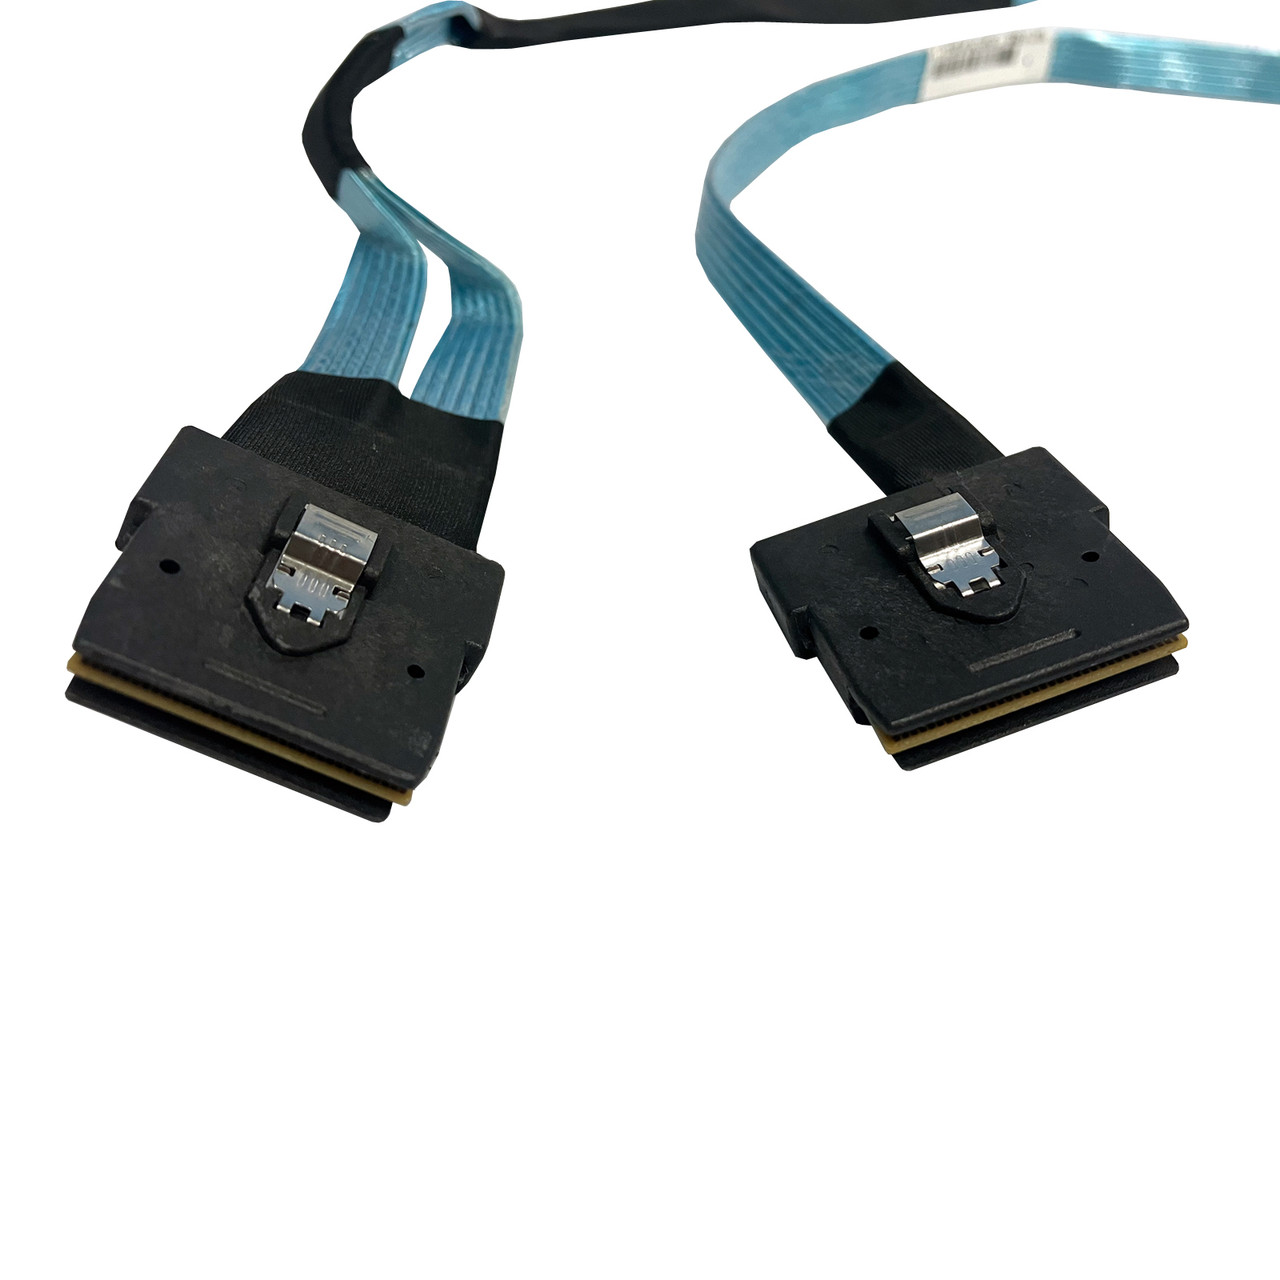 HPe 843234-B21 DL360 Gen9 Cable Kit P840AR 756911-001 780421-001